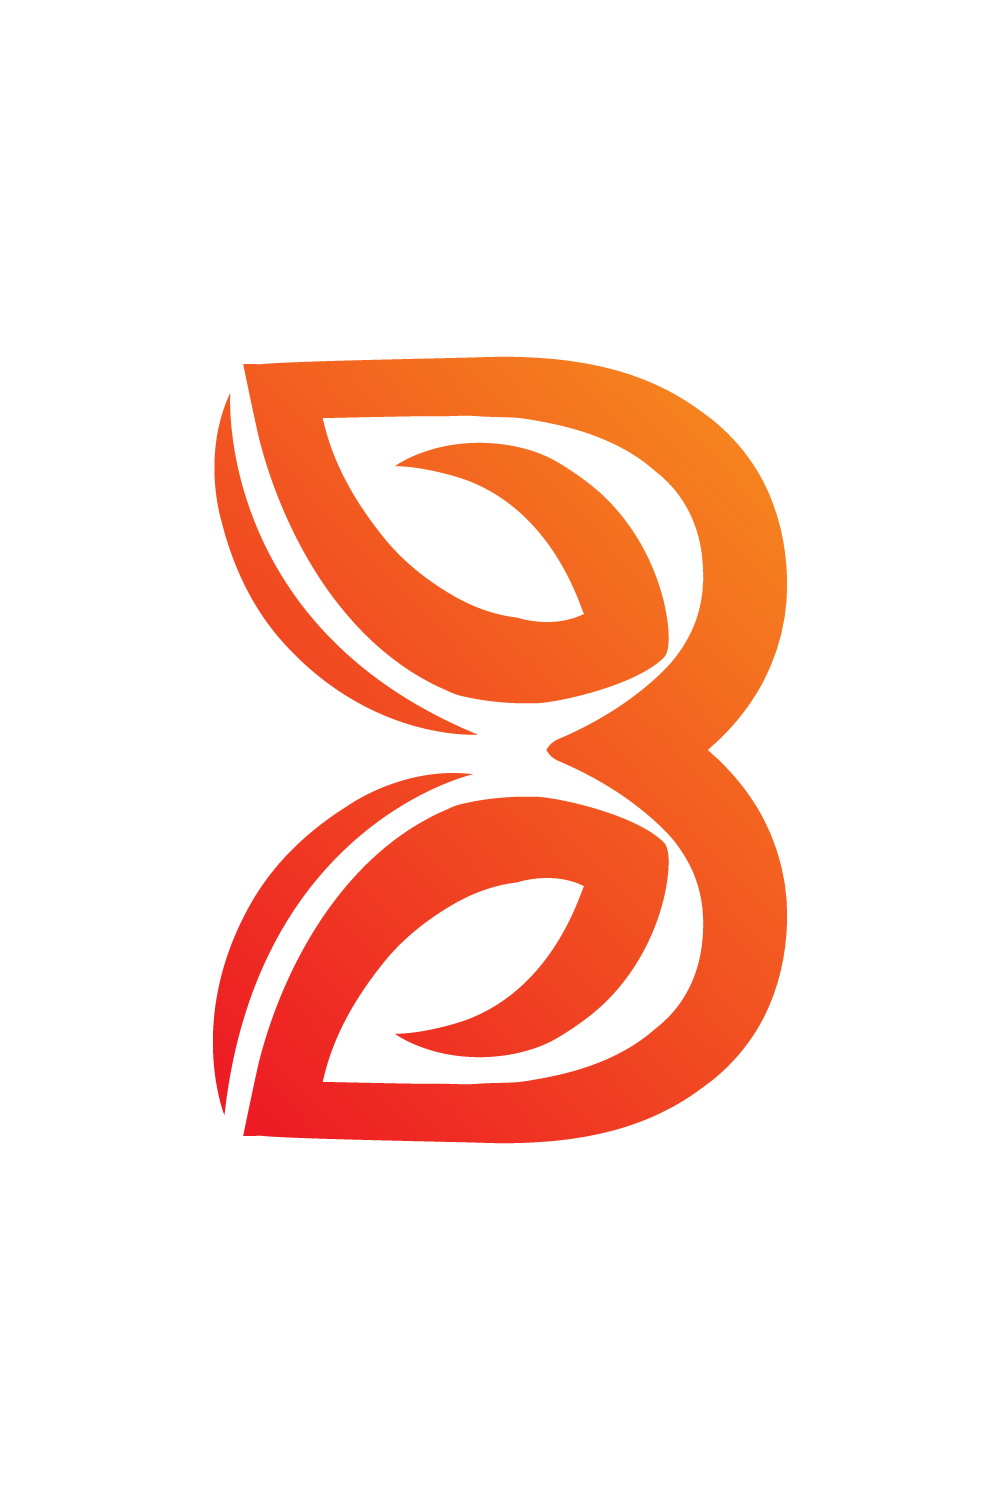 Initials B letters logo design vector images B Leaf logo design orange color best identity  pinterest preview image.